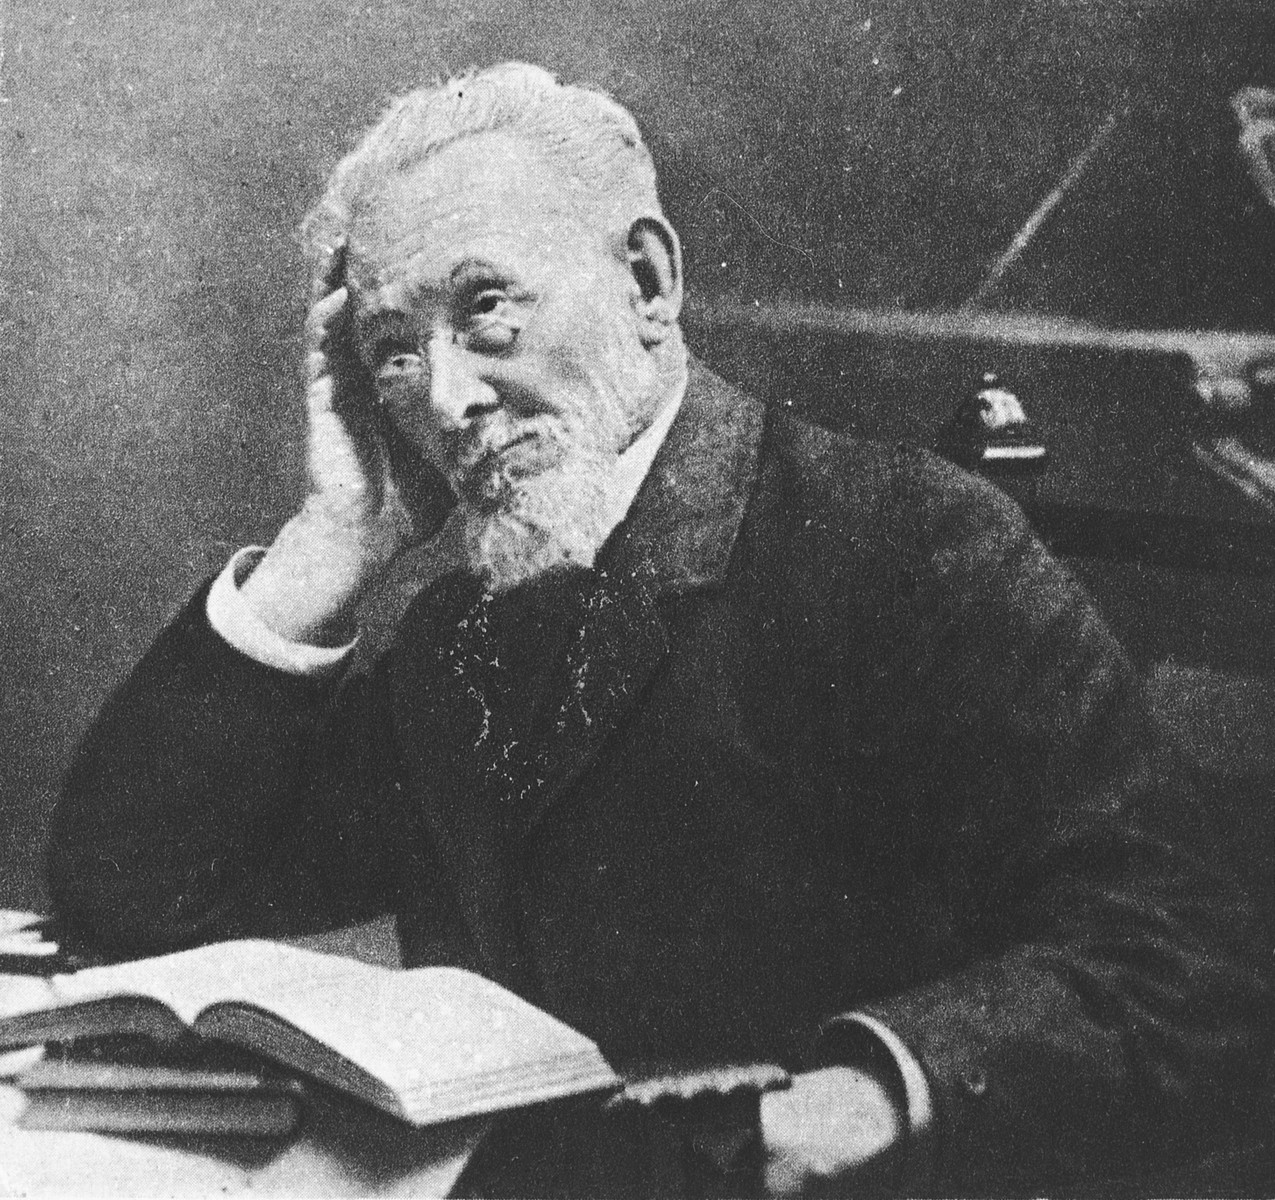 Portrait of the Yiddish author, Mendel Mokher Seforim (1835-1917).